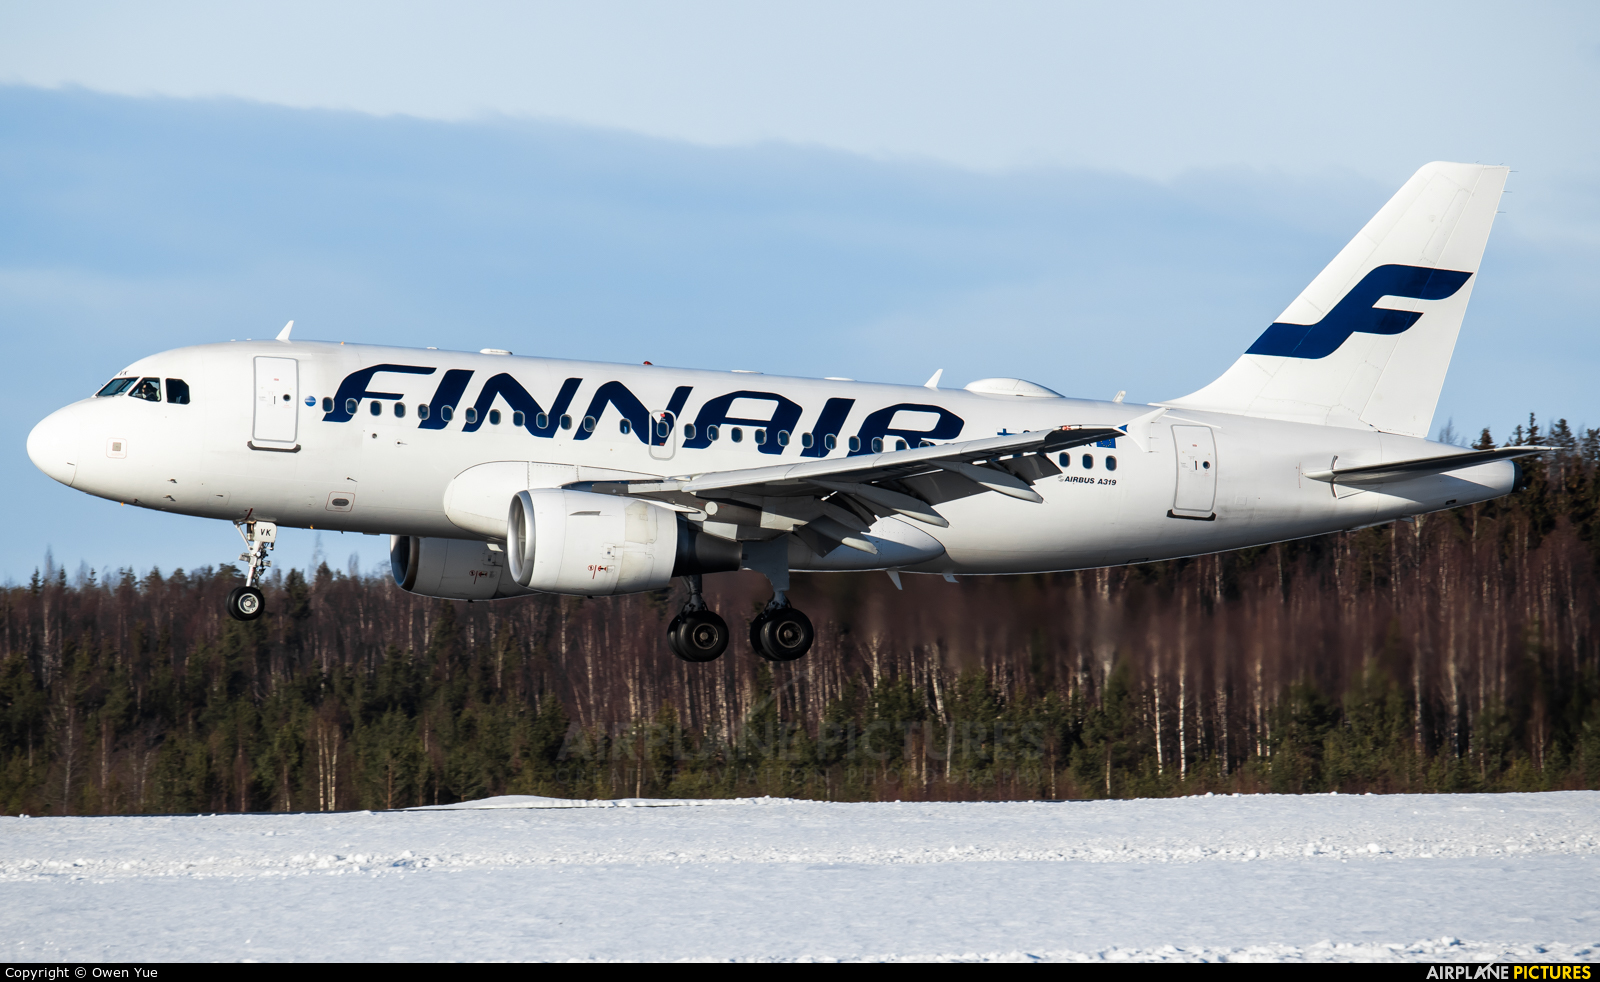 Finnair OH-LVK aircraft at Helsinki - Vantaa